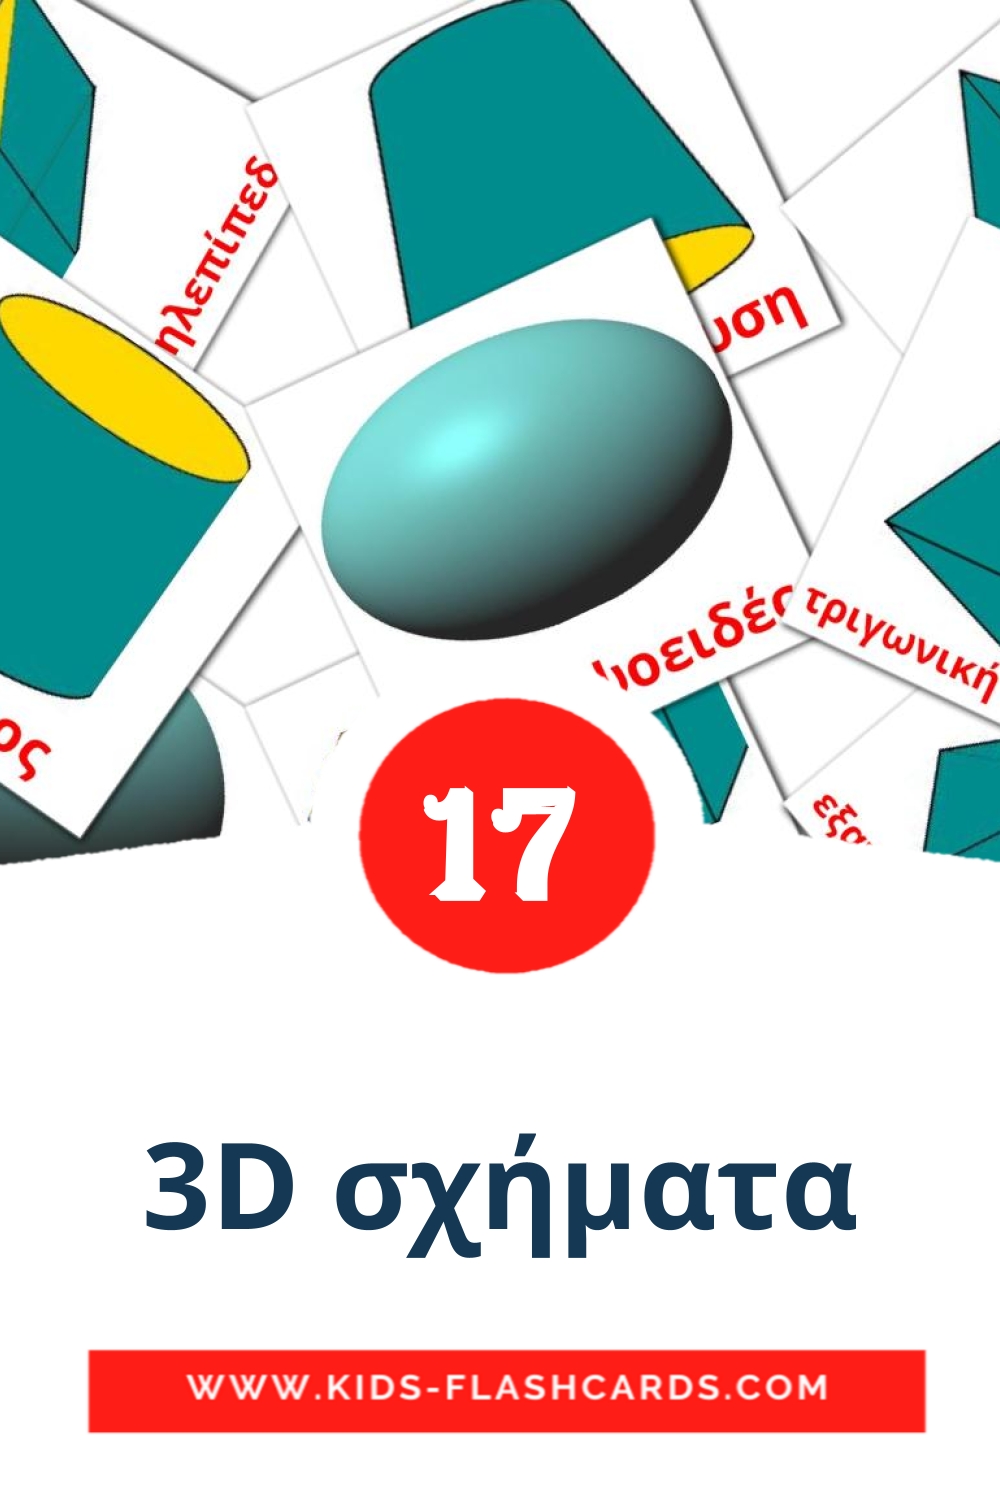 17 carte illustrate di 3D σχήματα per la scuola materna in greco